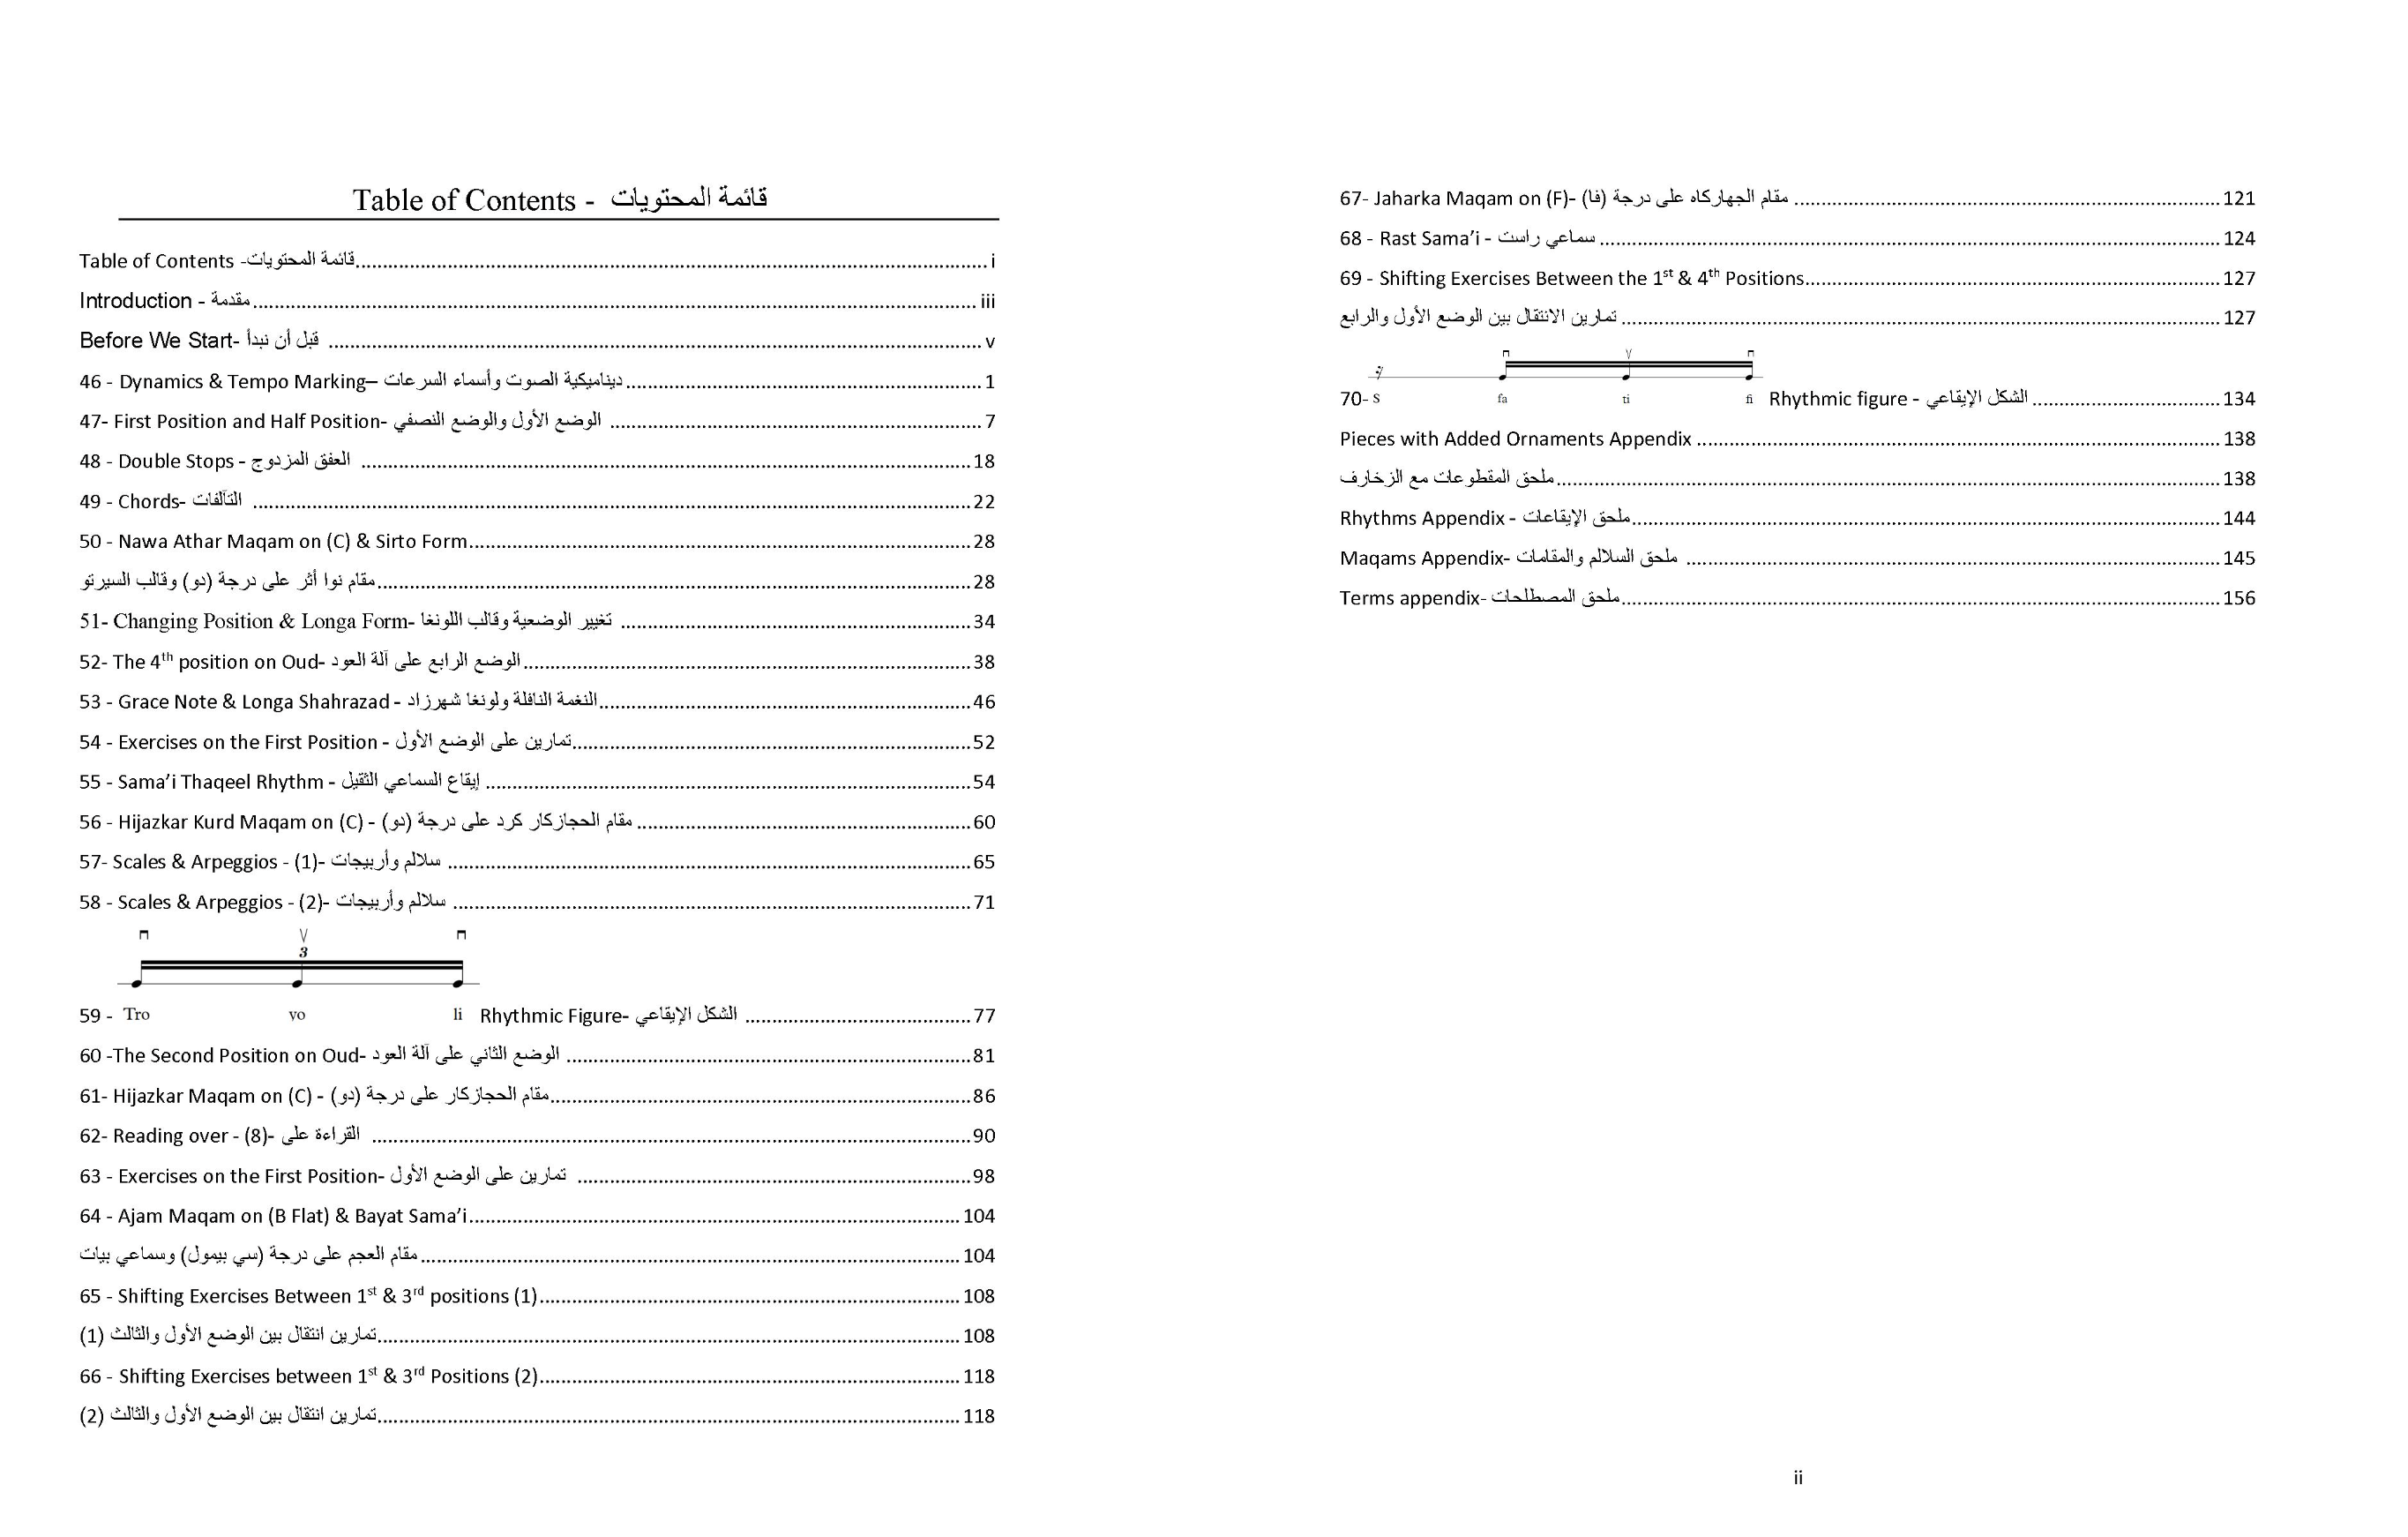 Tareq Jundi Oud Method 2 Books for Intermediate